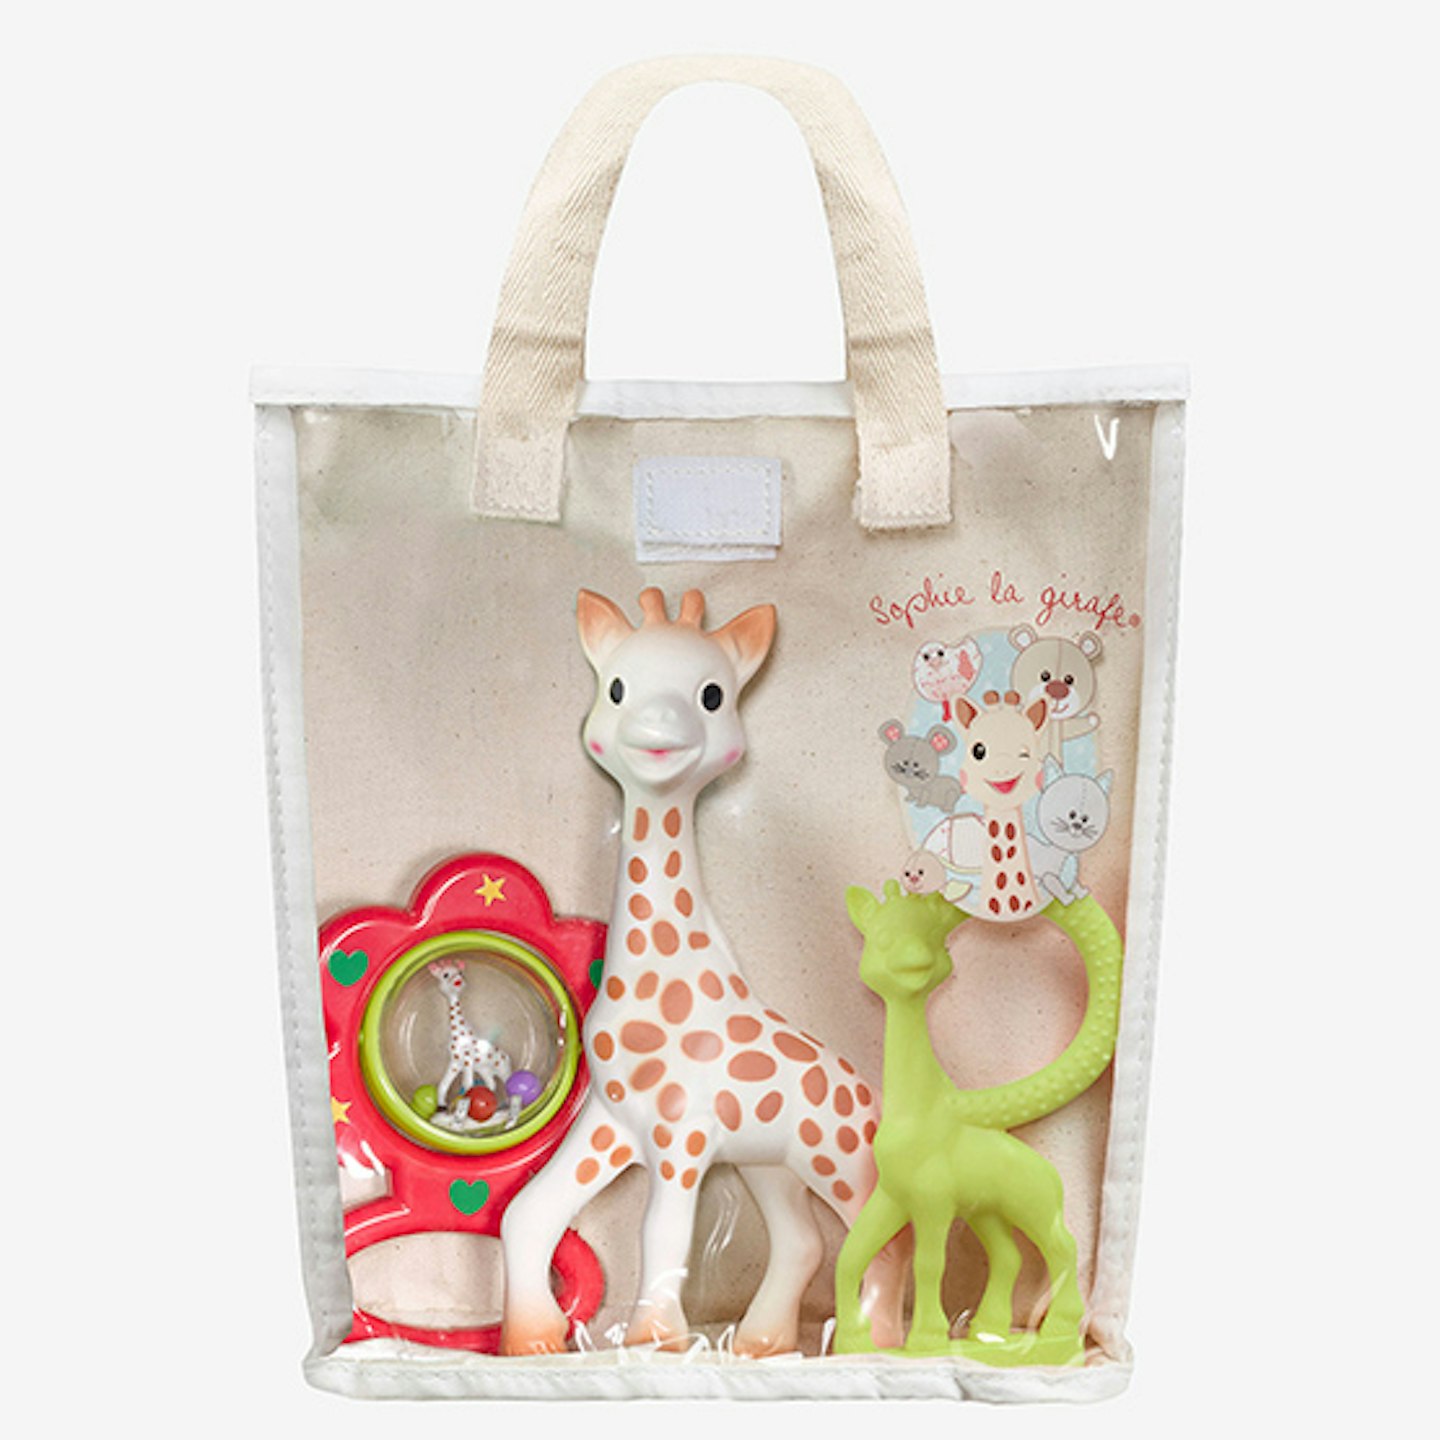 Sophie la girafe gift bag